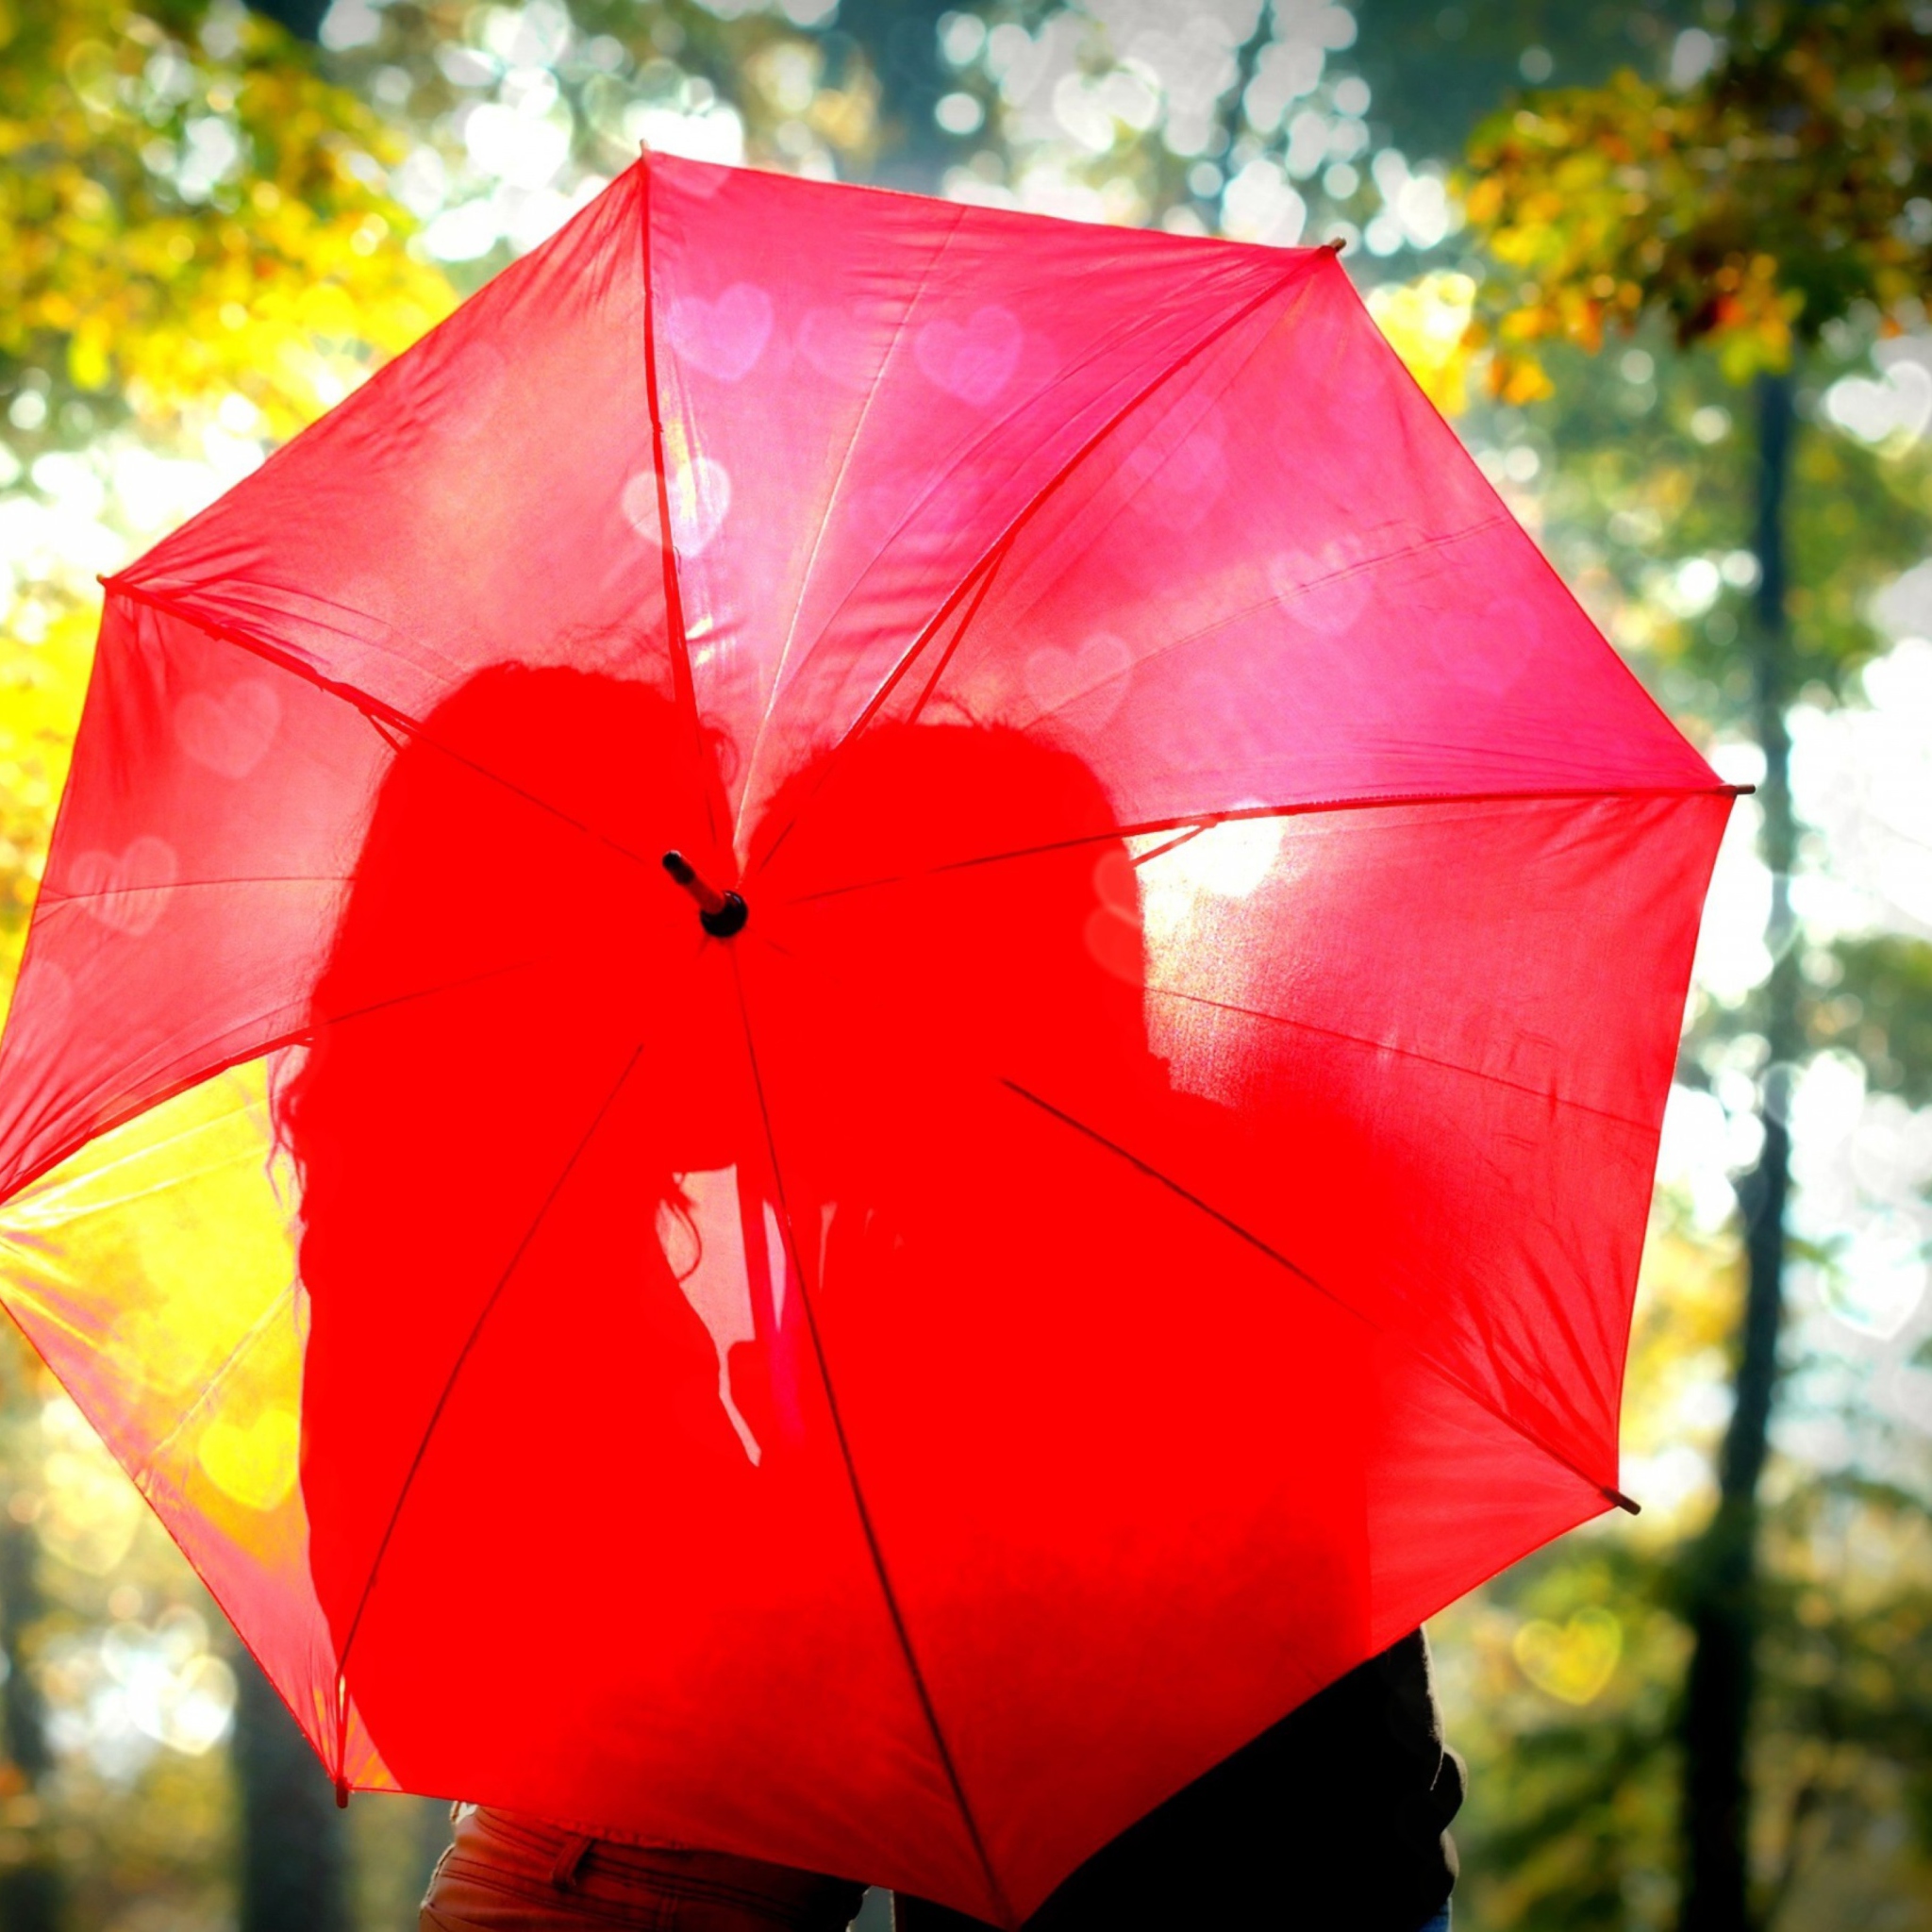 Das Couple Behind Red Umbrella Wallpaper 2048x2048